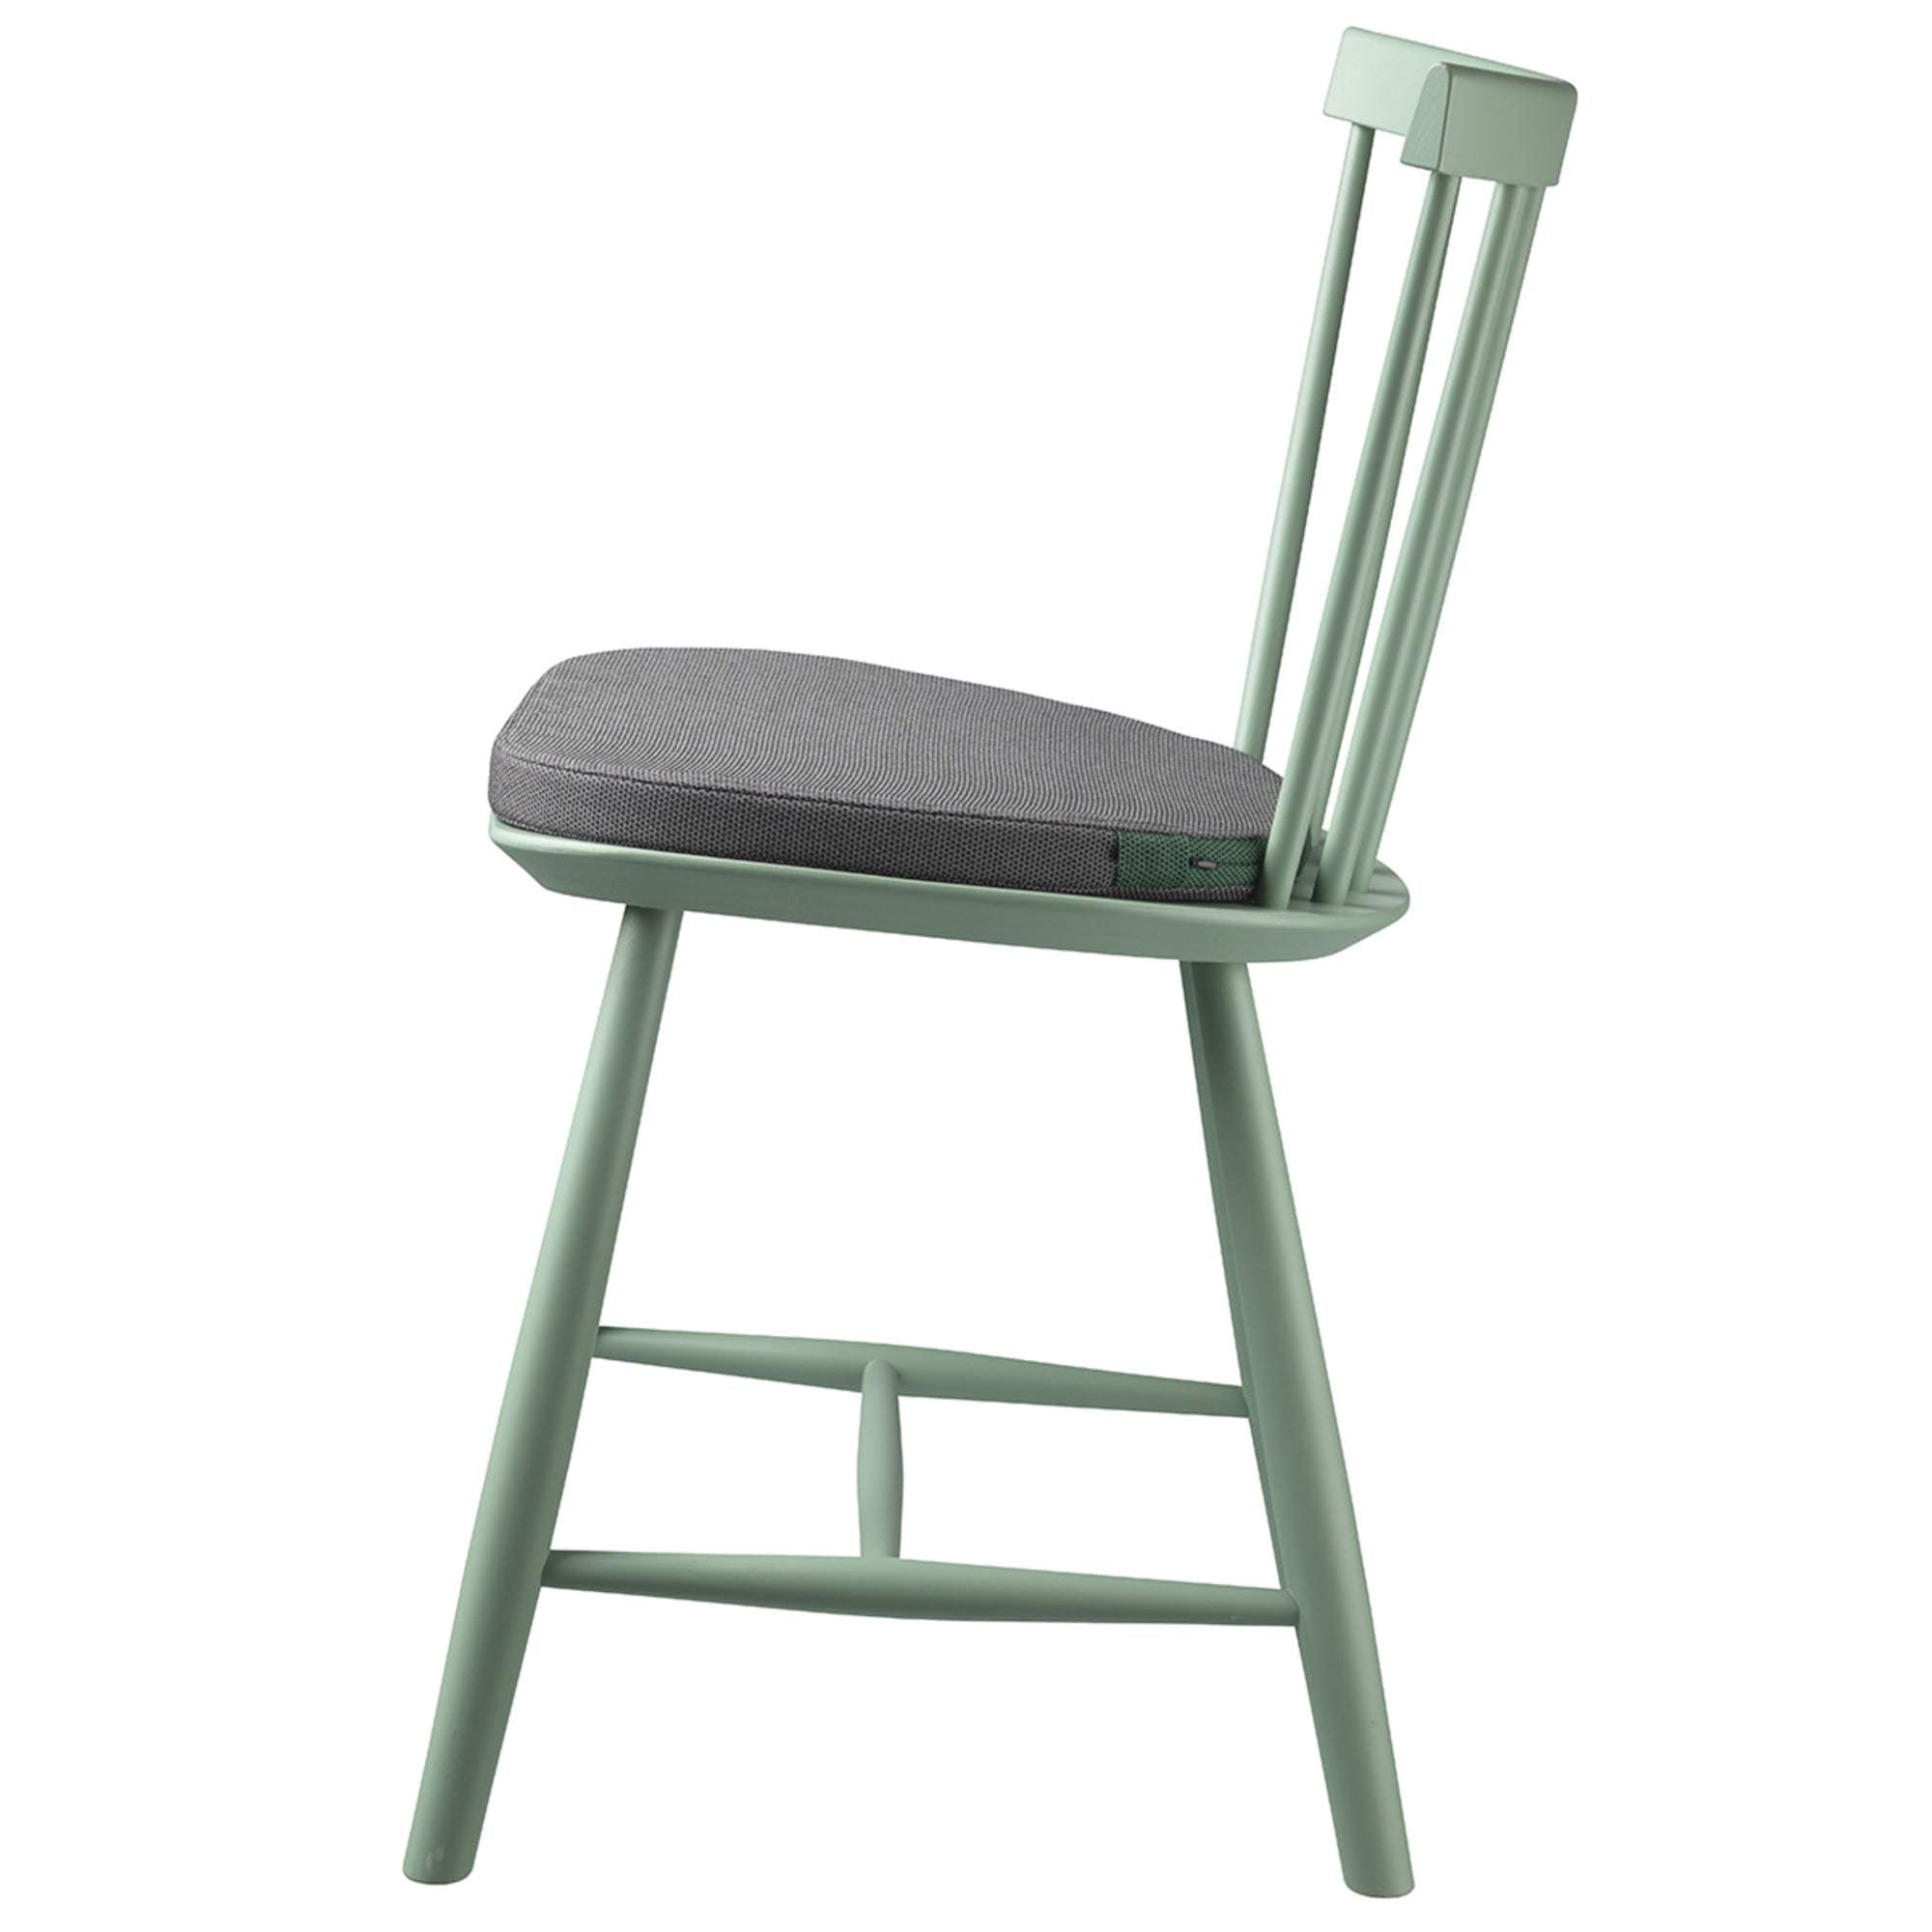 Fdb Møbler R4 Seat Cushion For J46 Chair, Grey/Green